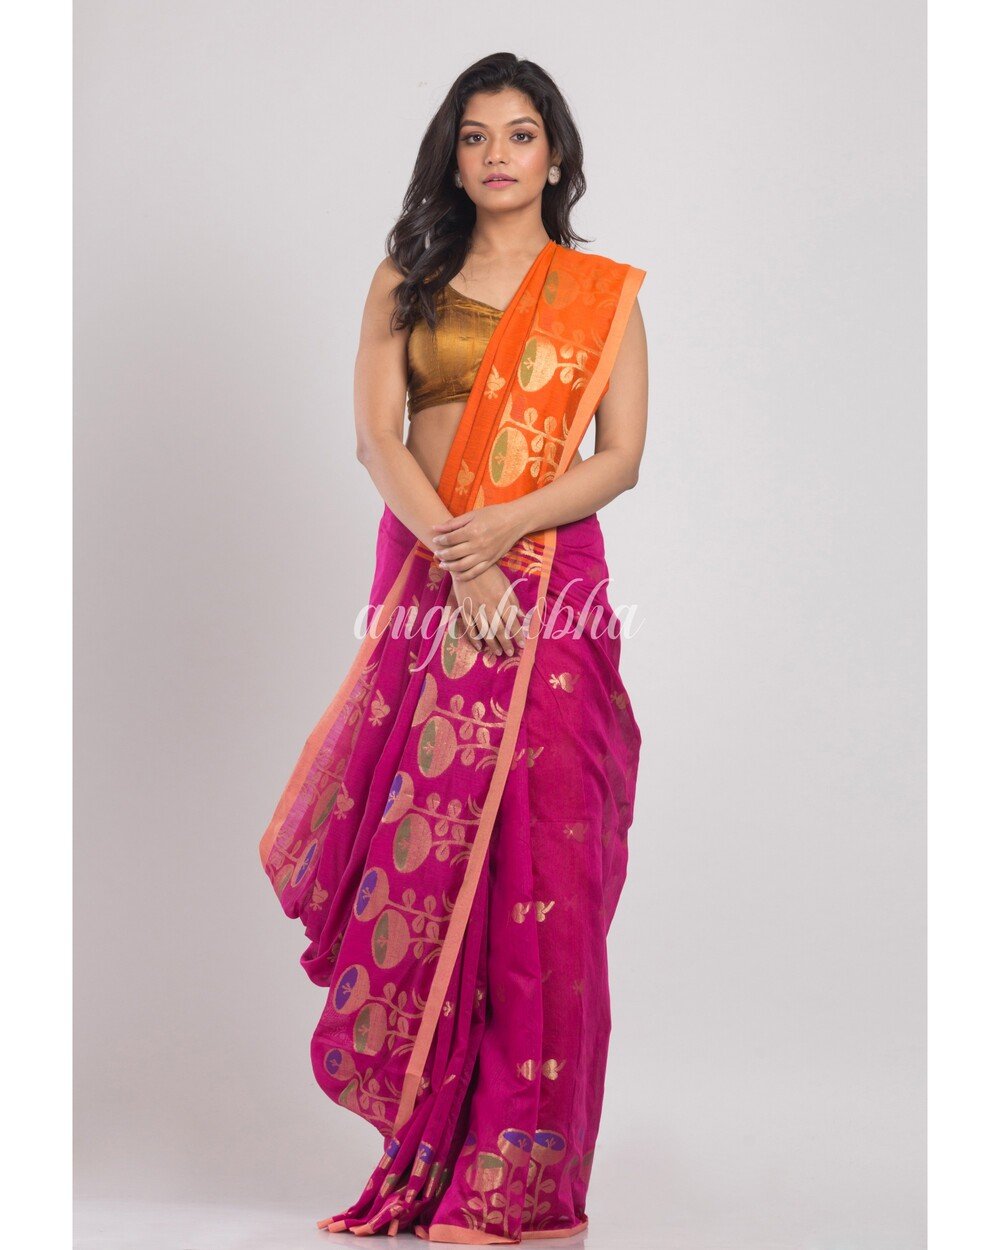 Women's Pink Handwoven Cotton Silk Saree - Angoshobha